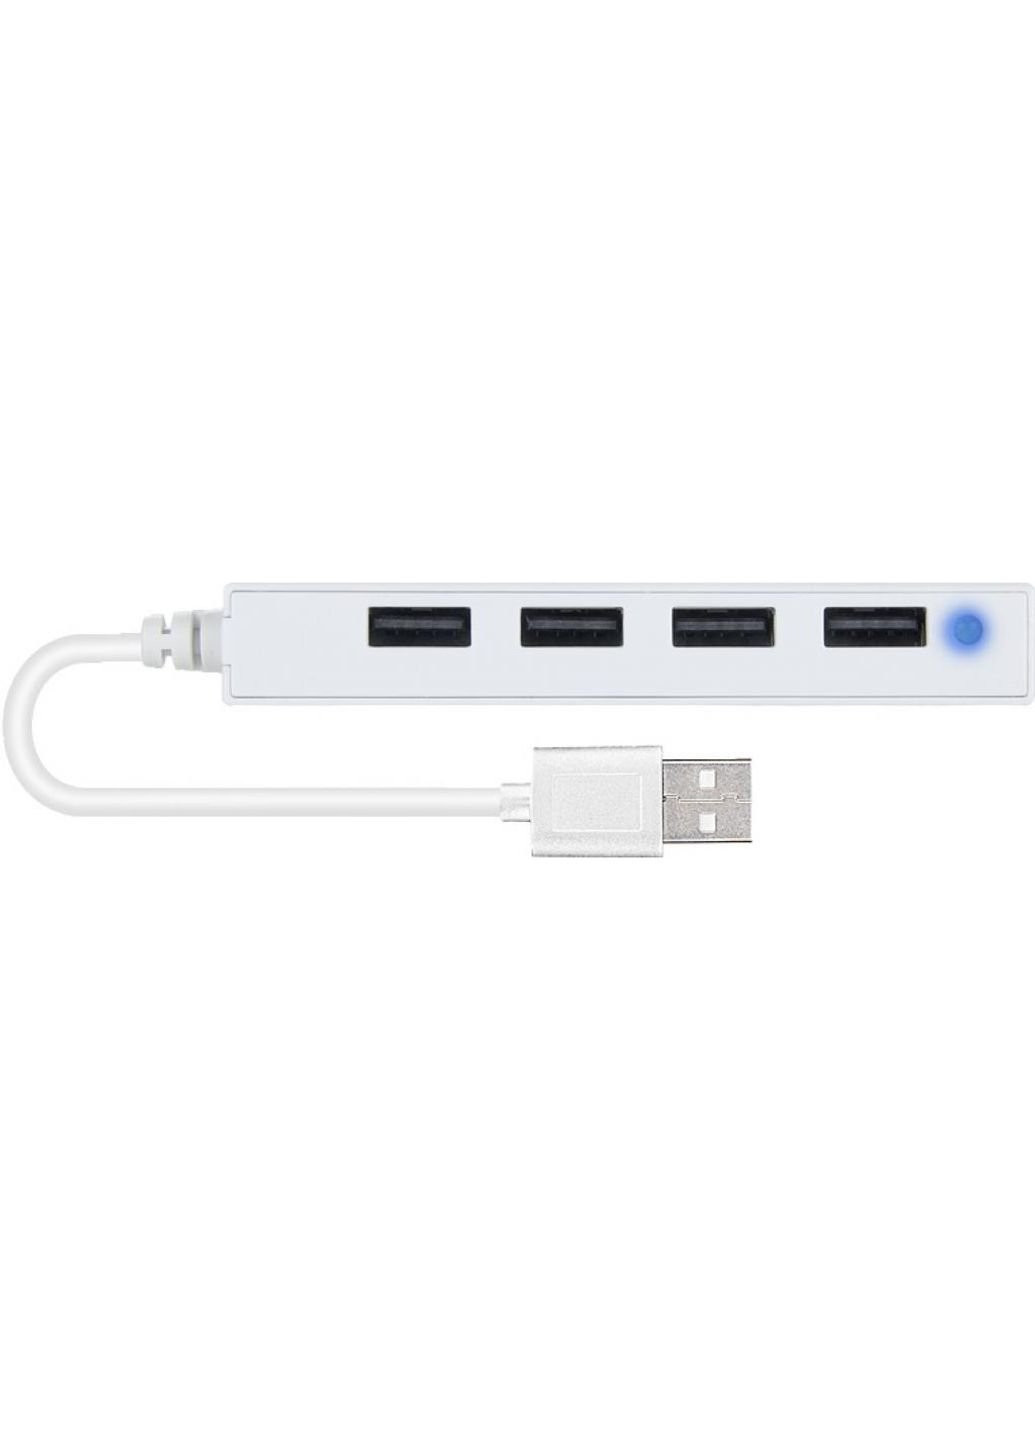 Концентратор SNAPPY SLIM USB Hub, 4-Port, USB 2.0, Passive, White (SL-140000-WE) Speedlink (250125382)